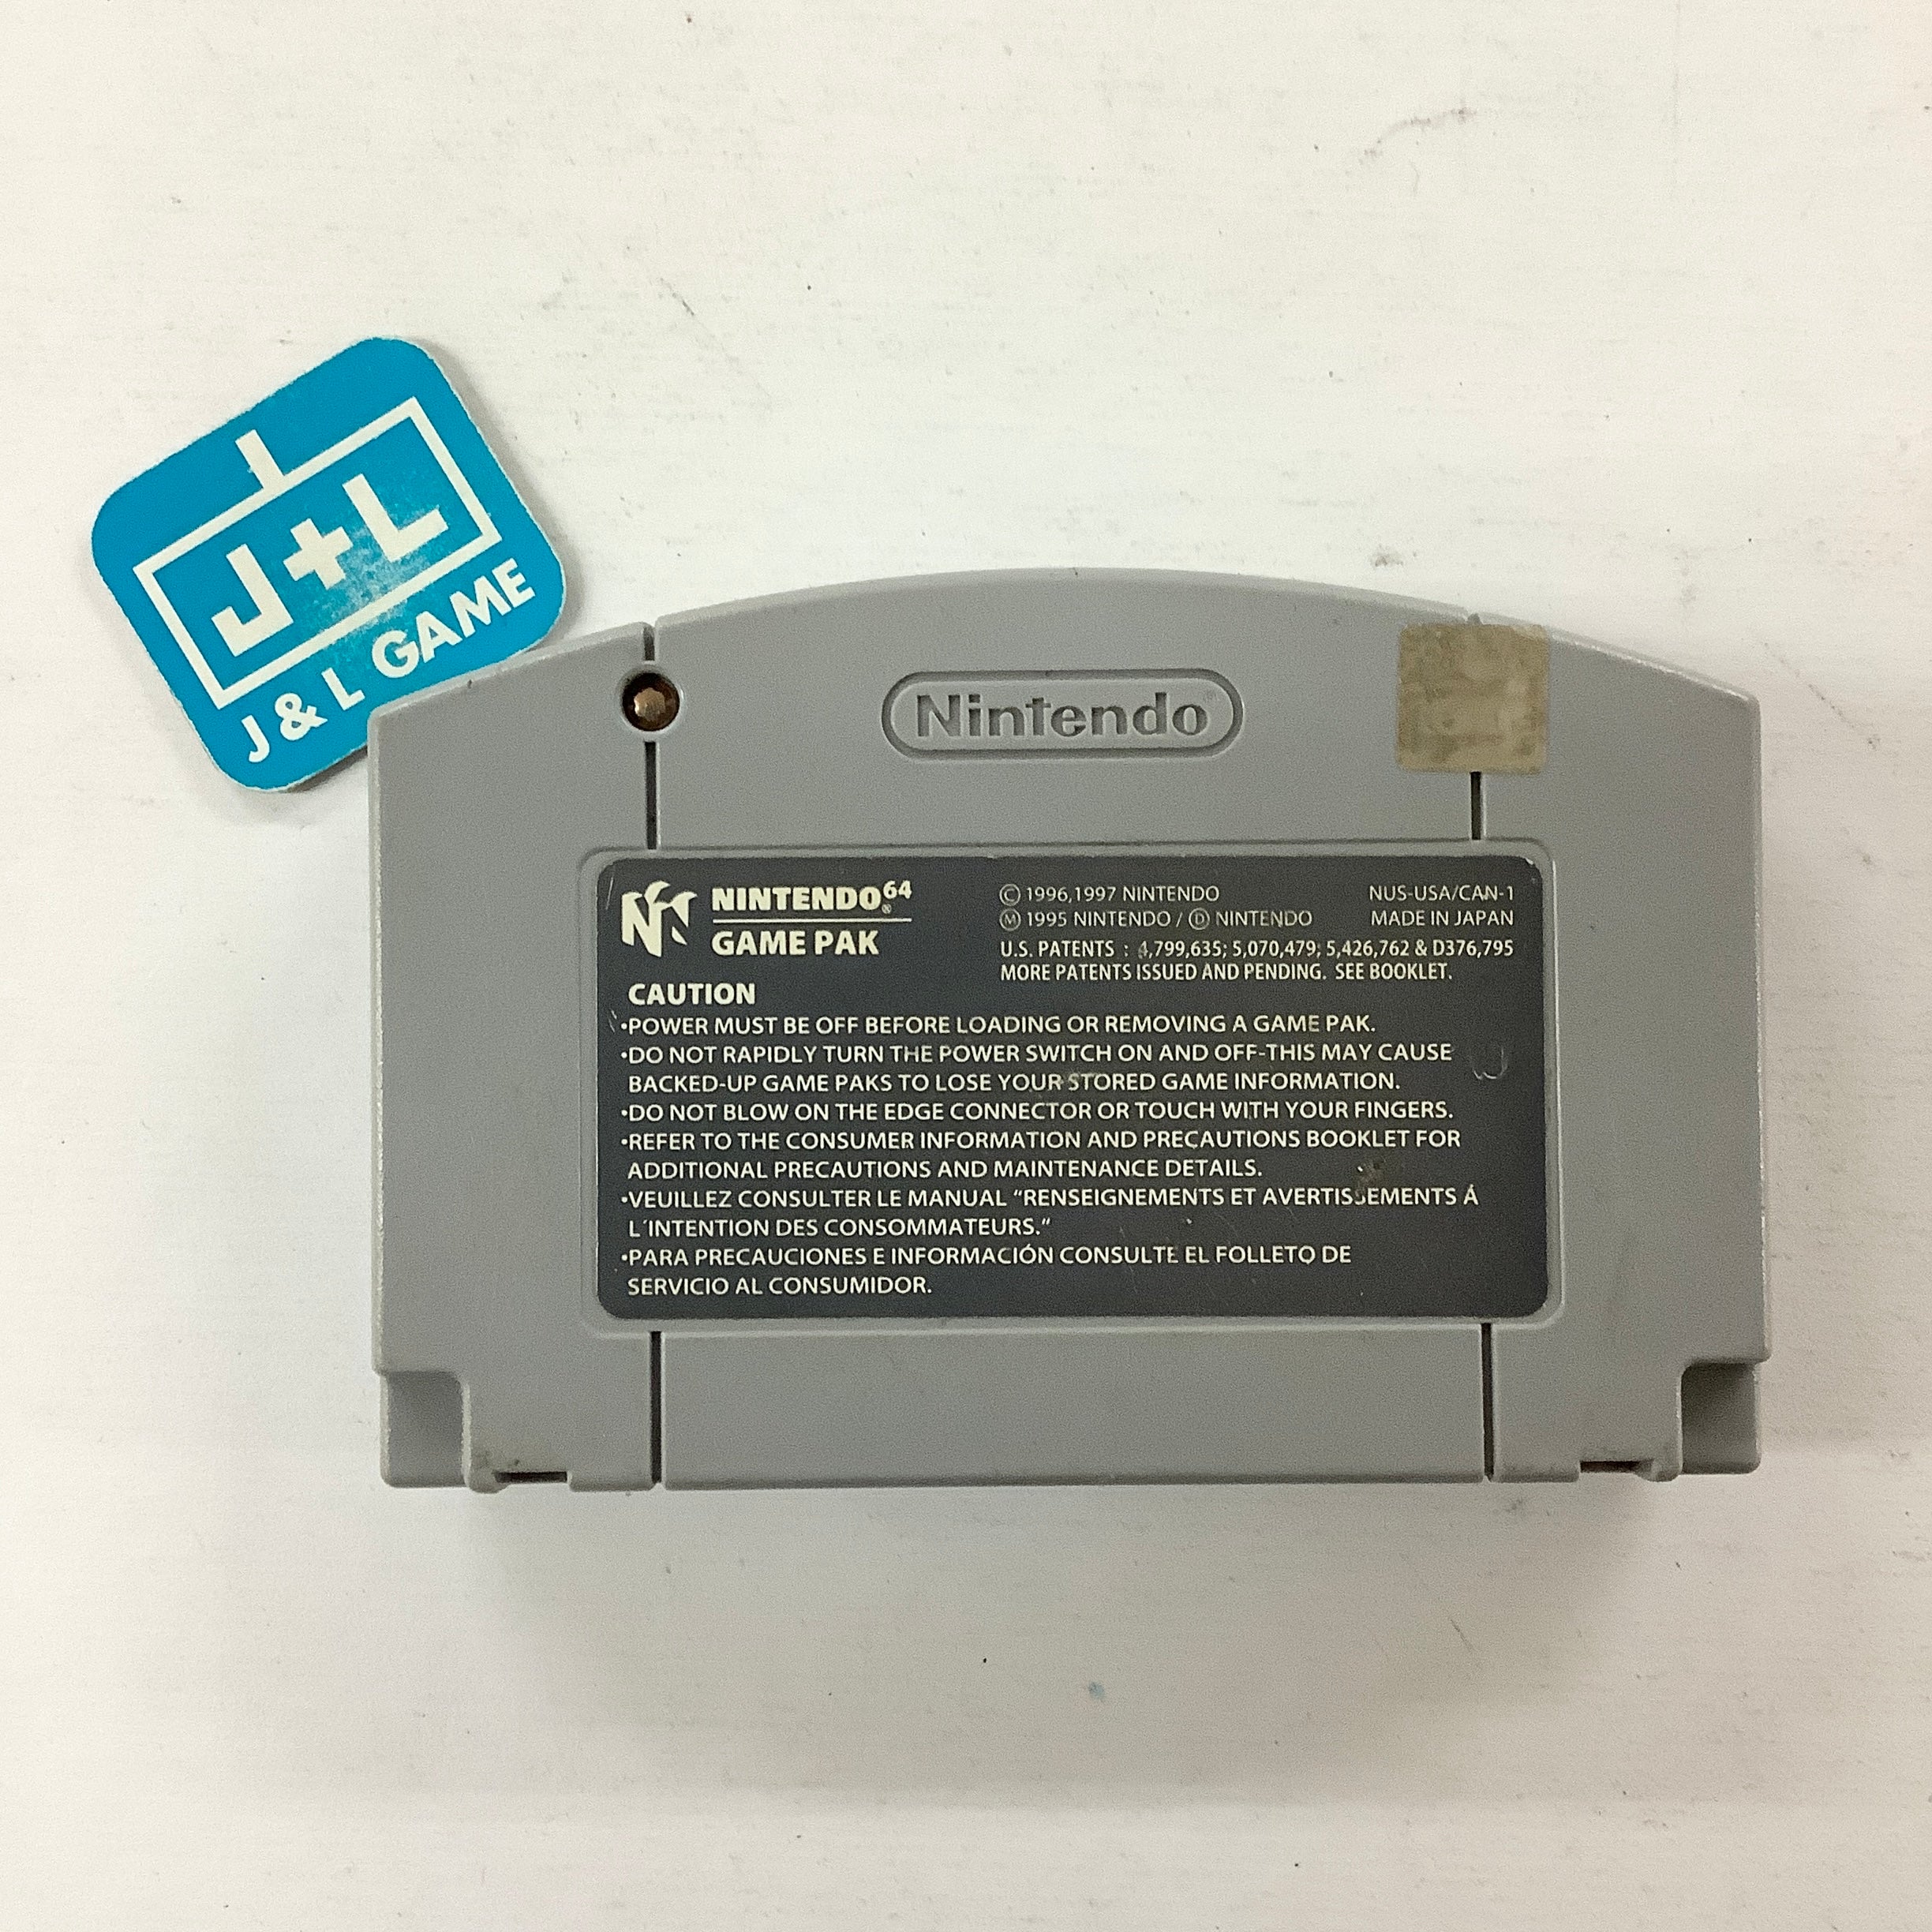 BattleTanx - (N64) Nintendo 64  [Pre-Owned] Video Games 3DO   